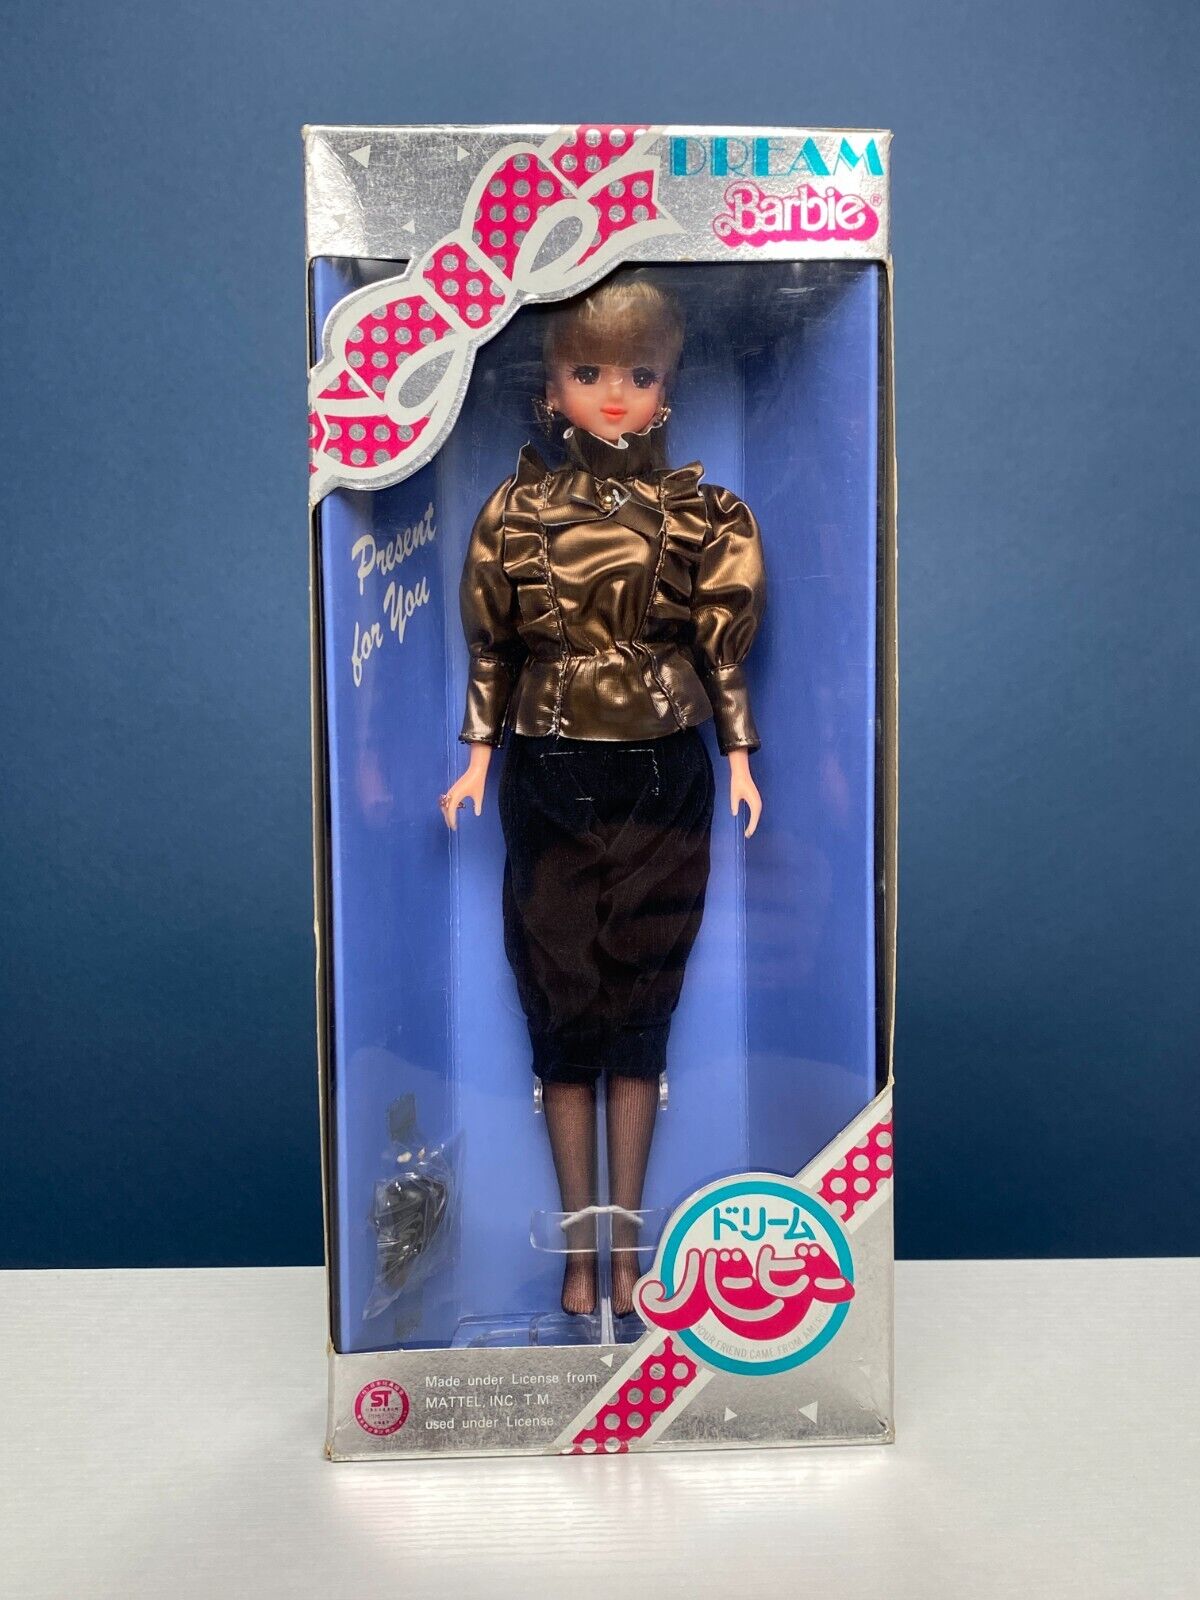 Vintage Takara Japan Dream Barbie - Original box - NIB  (circa 1984)